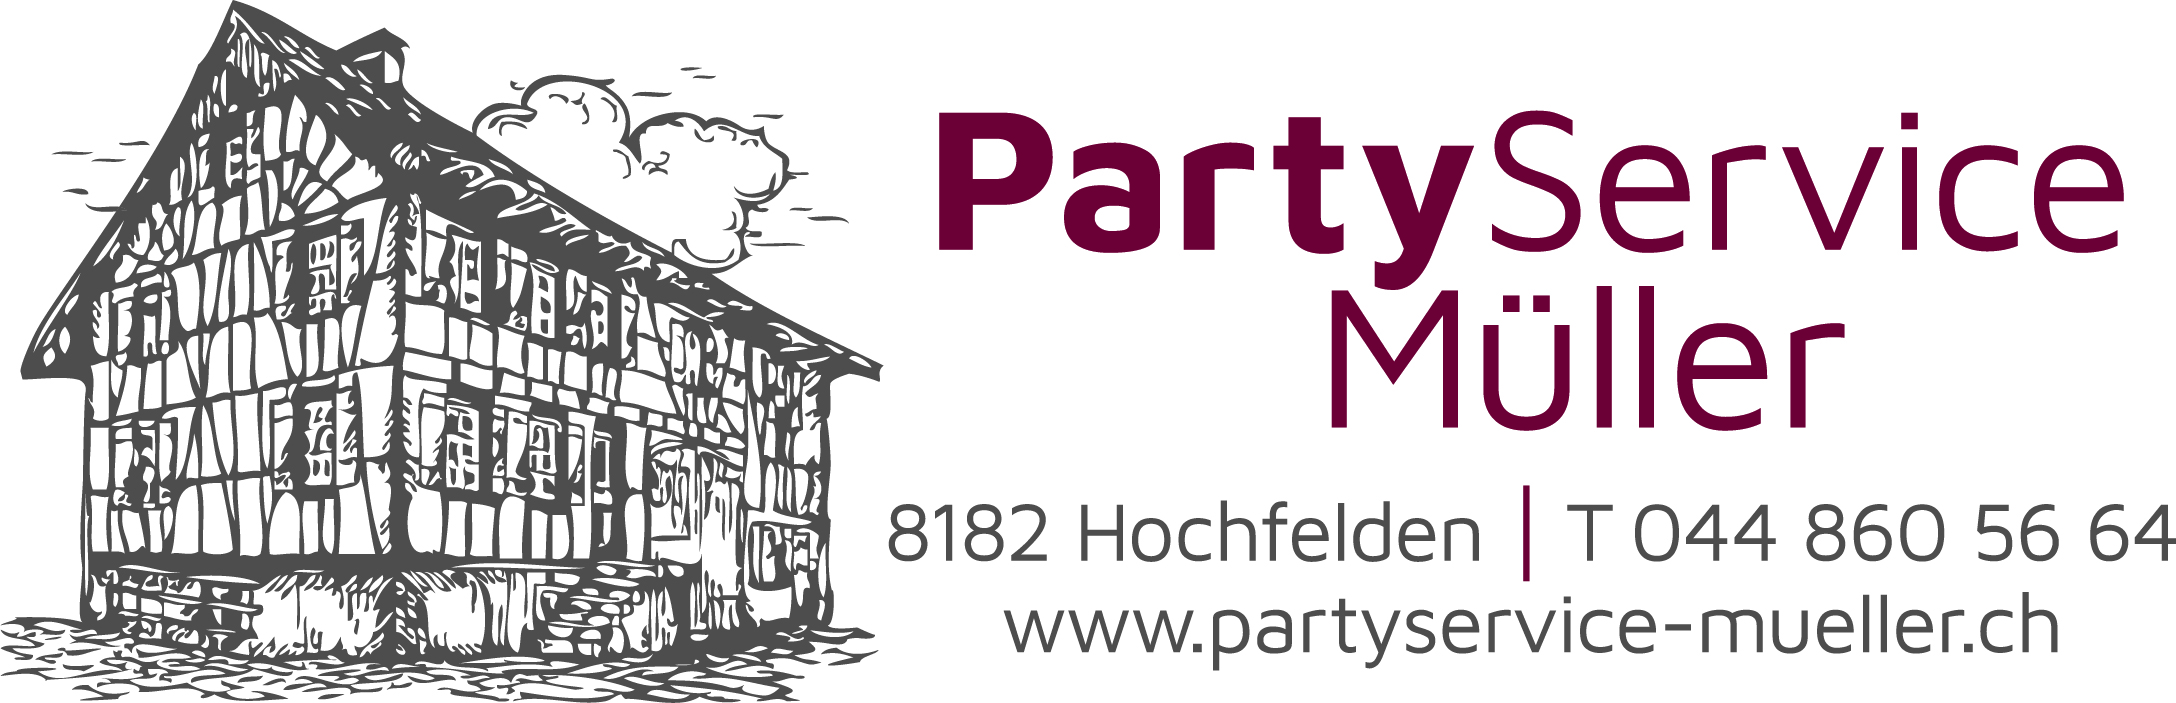 Partyservice Müller AG